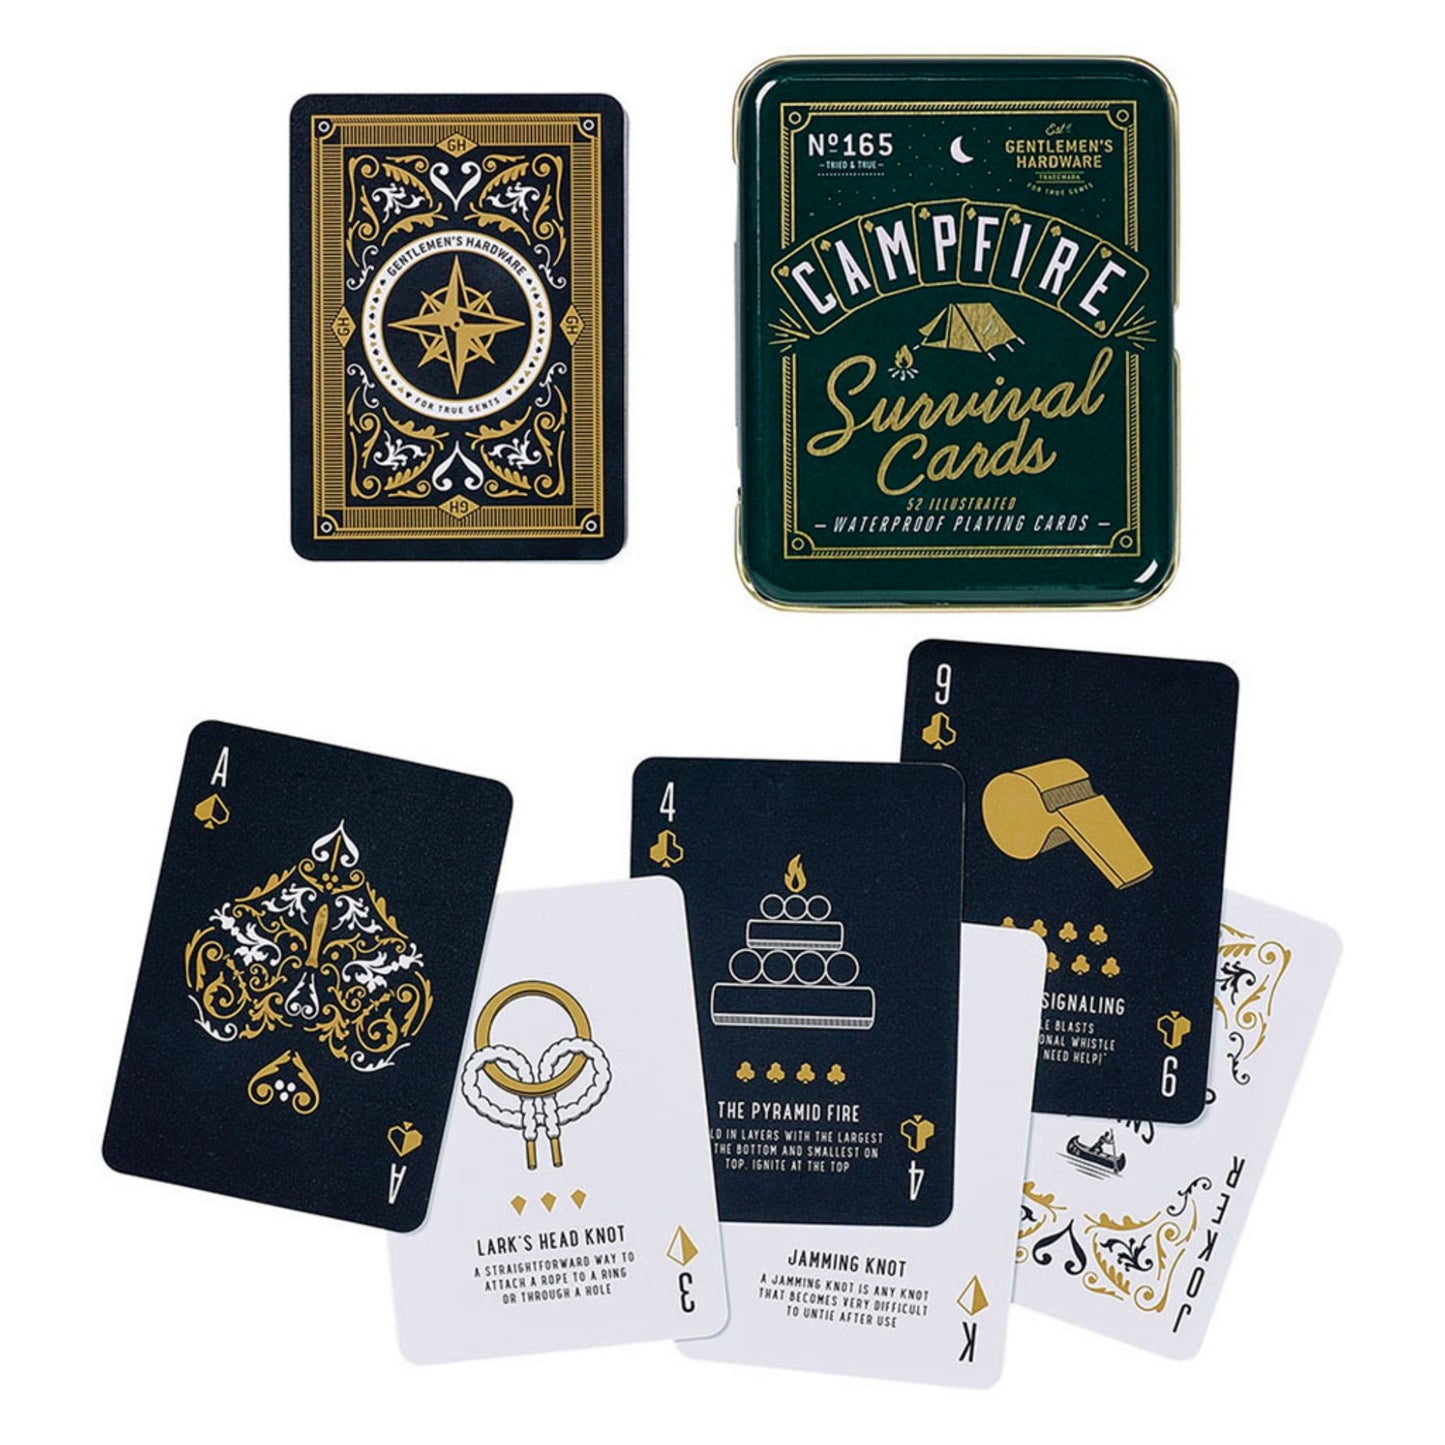 Campfire Survival Cards | Gentlemen's hardware